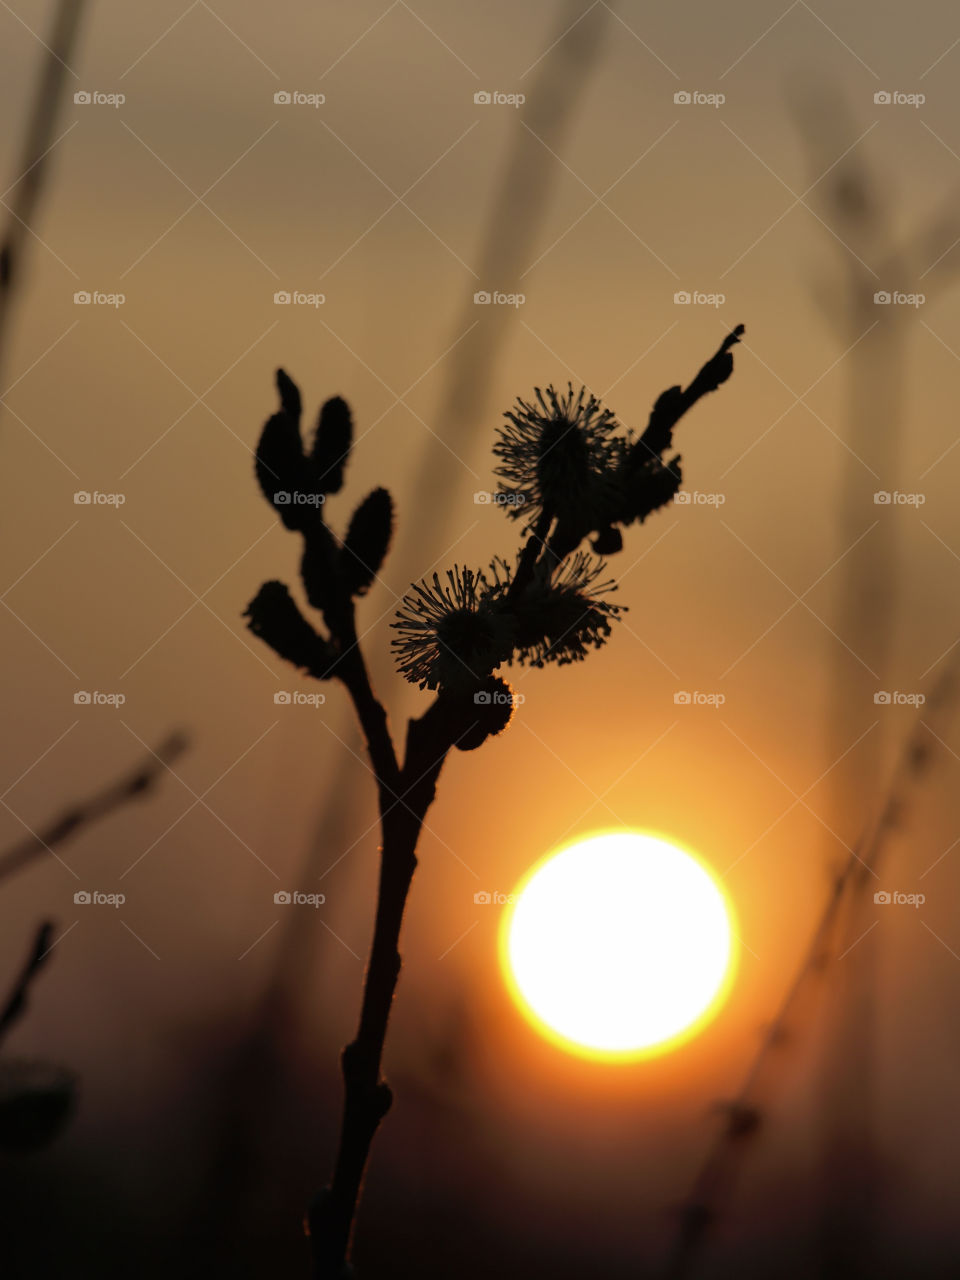 Plant silhouette against setting sun